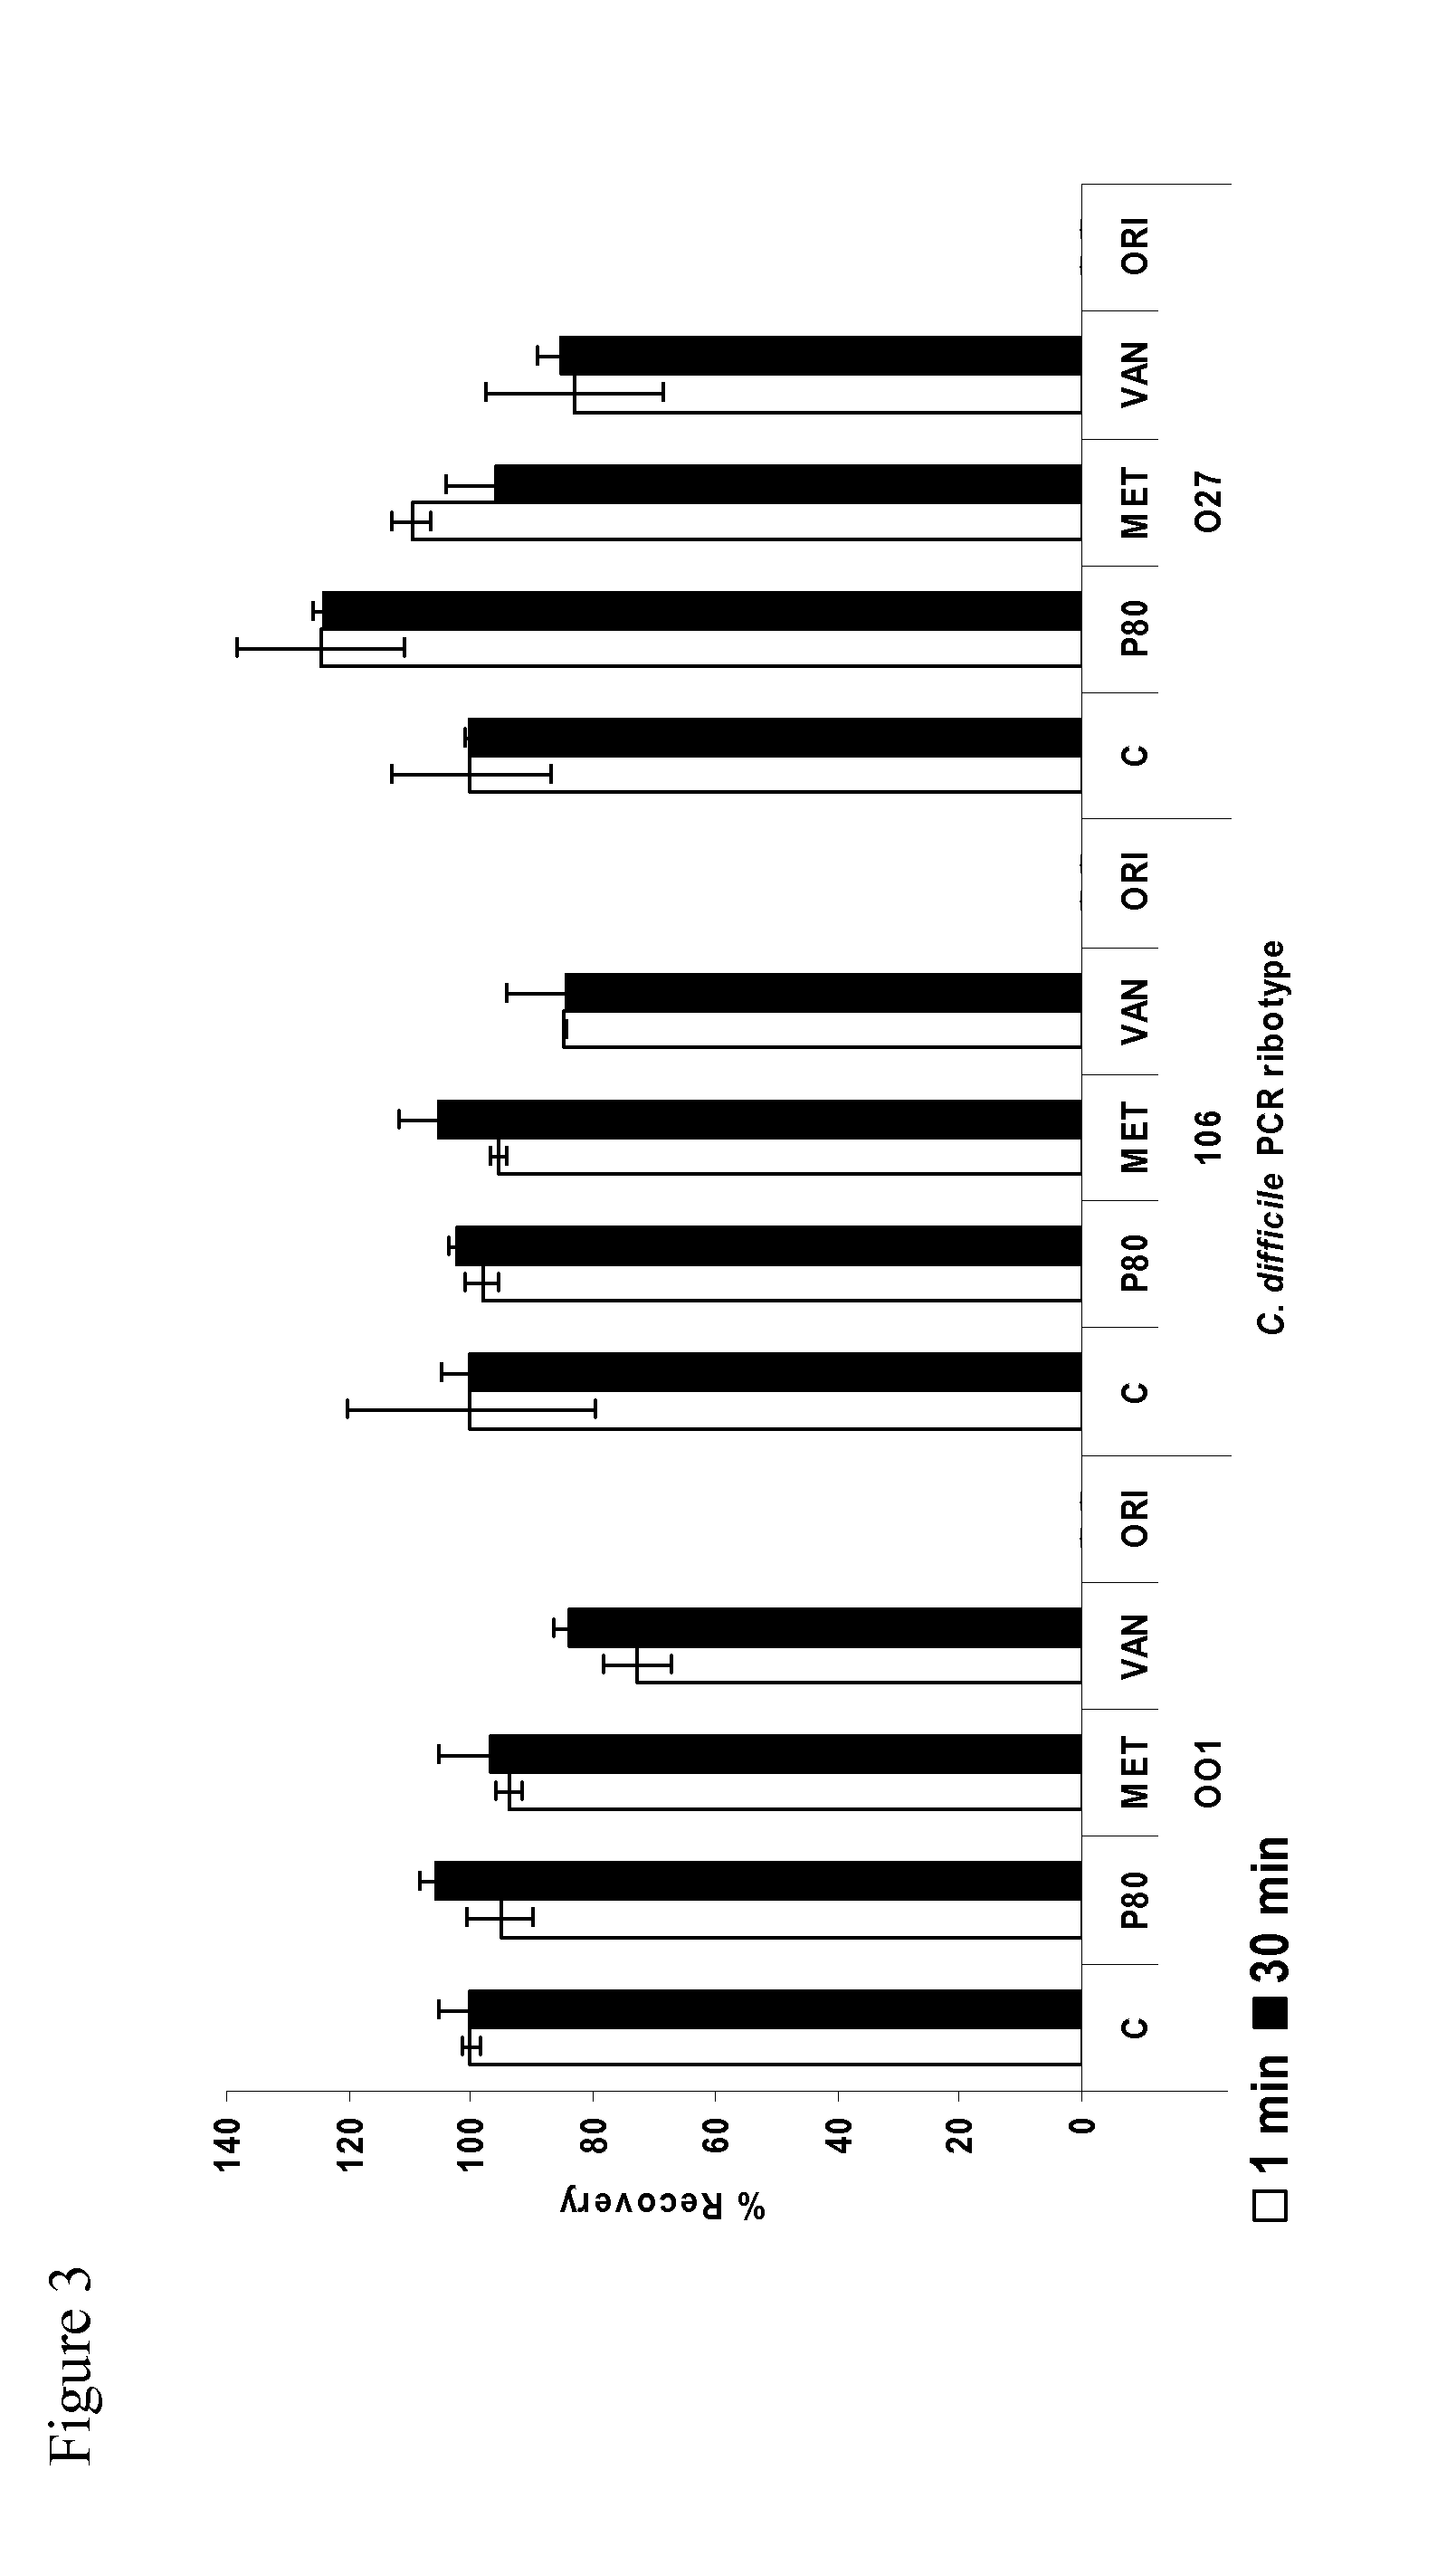 Method of inhibiting clostridium difficile by administration of oritavancin